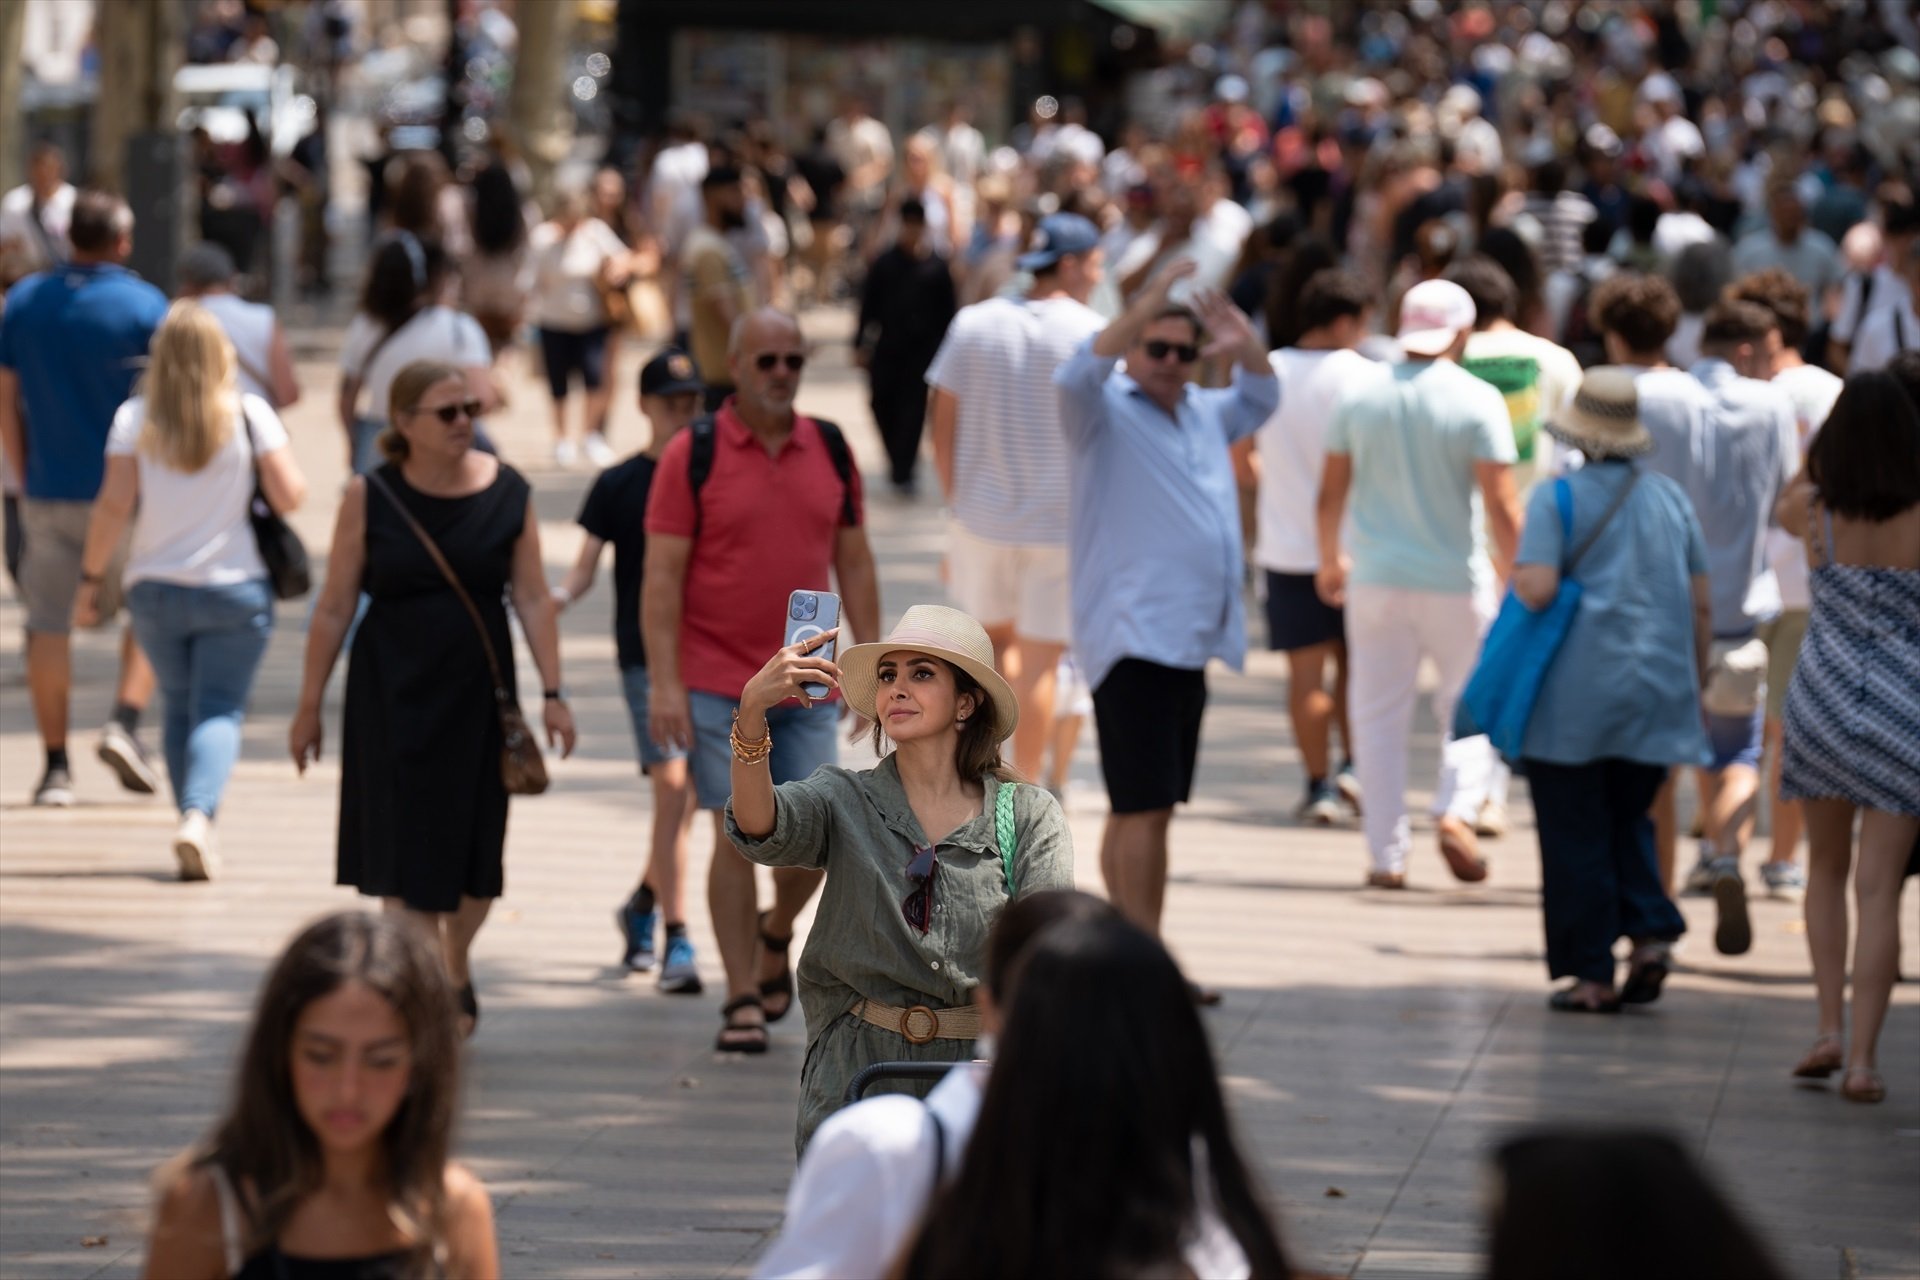 El 70,9% de la població de Barcelona considera el turisme beneficiós, segons un sondeig municipal